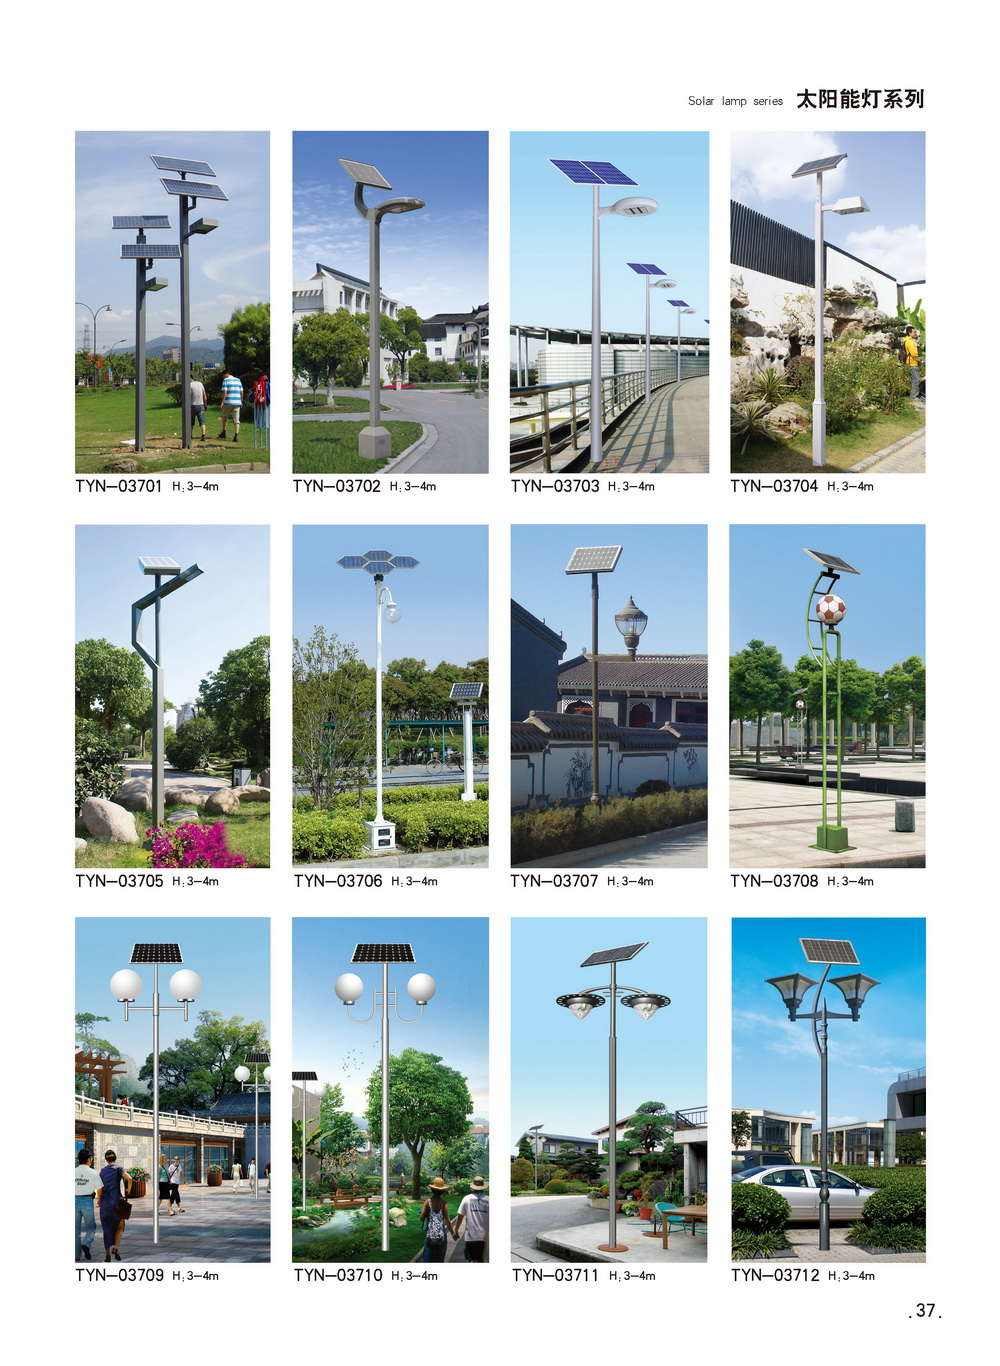 Solar street light, new rural household courtyard light, integrated outdoor light